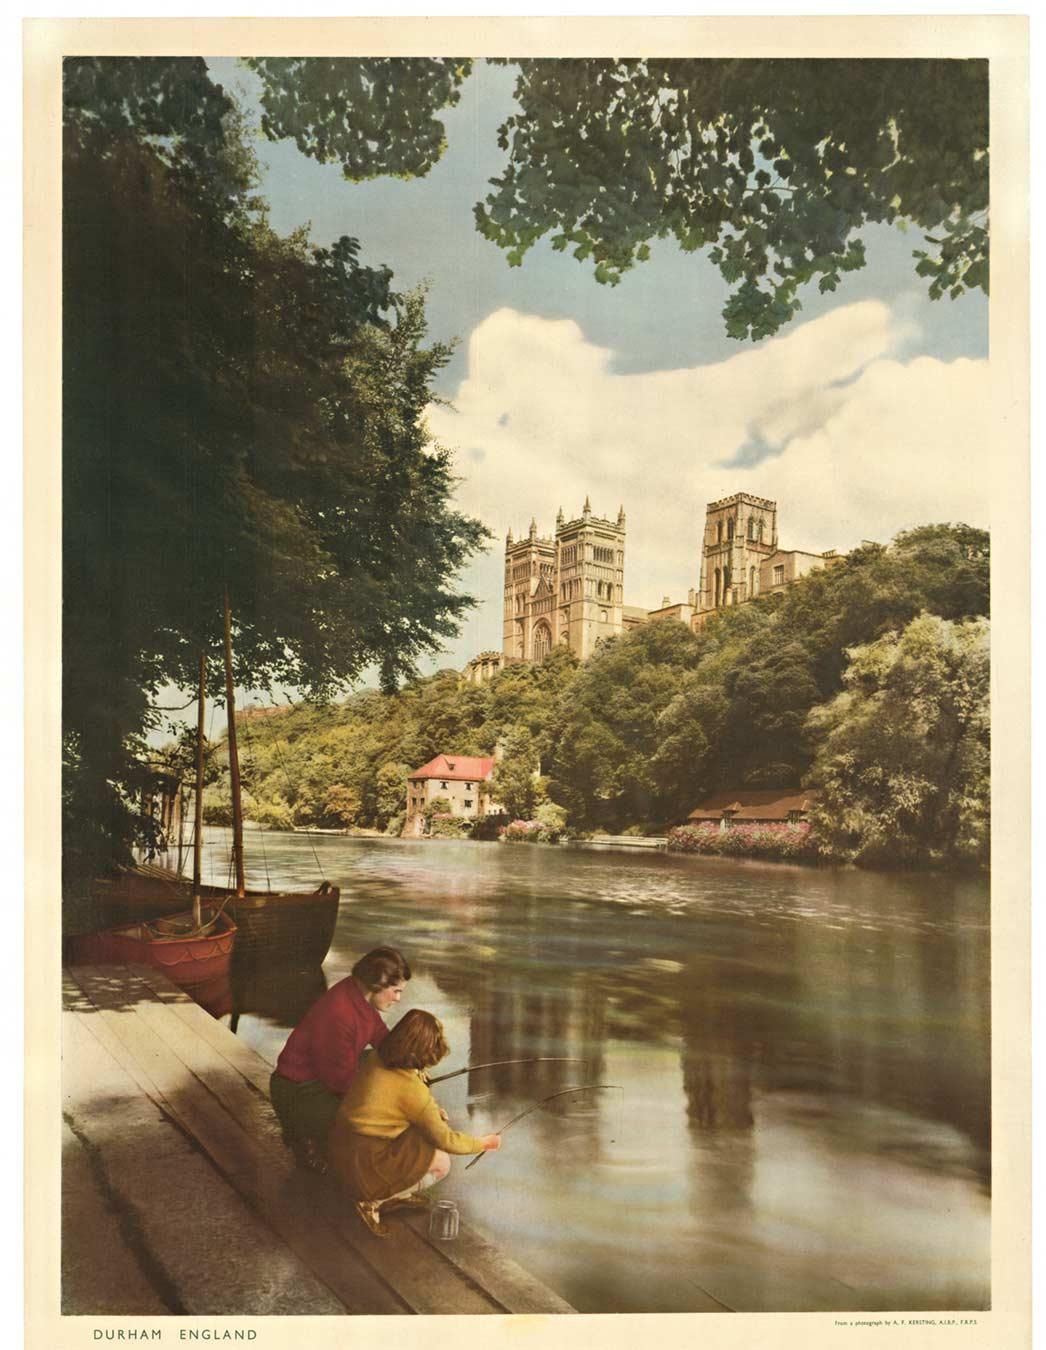 Original Durham England British Railways Vintage Travel poster - Print by Anthony Frank Kersting